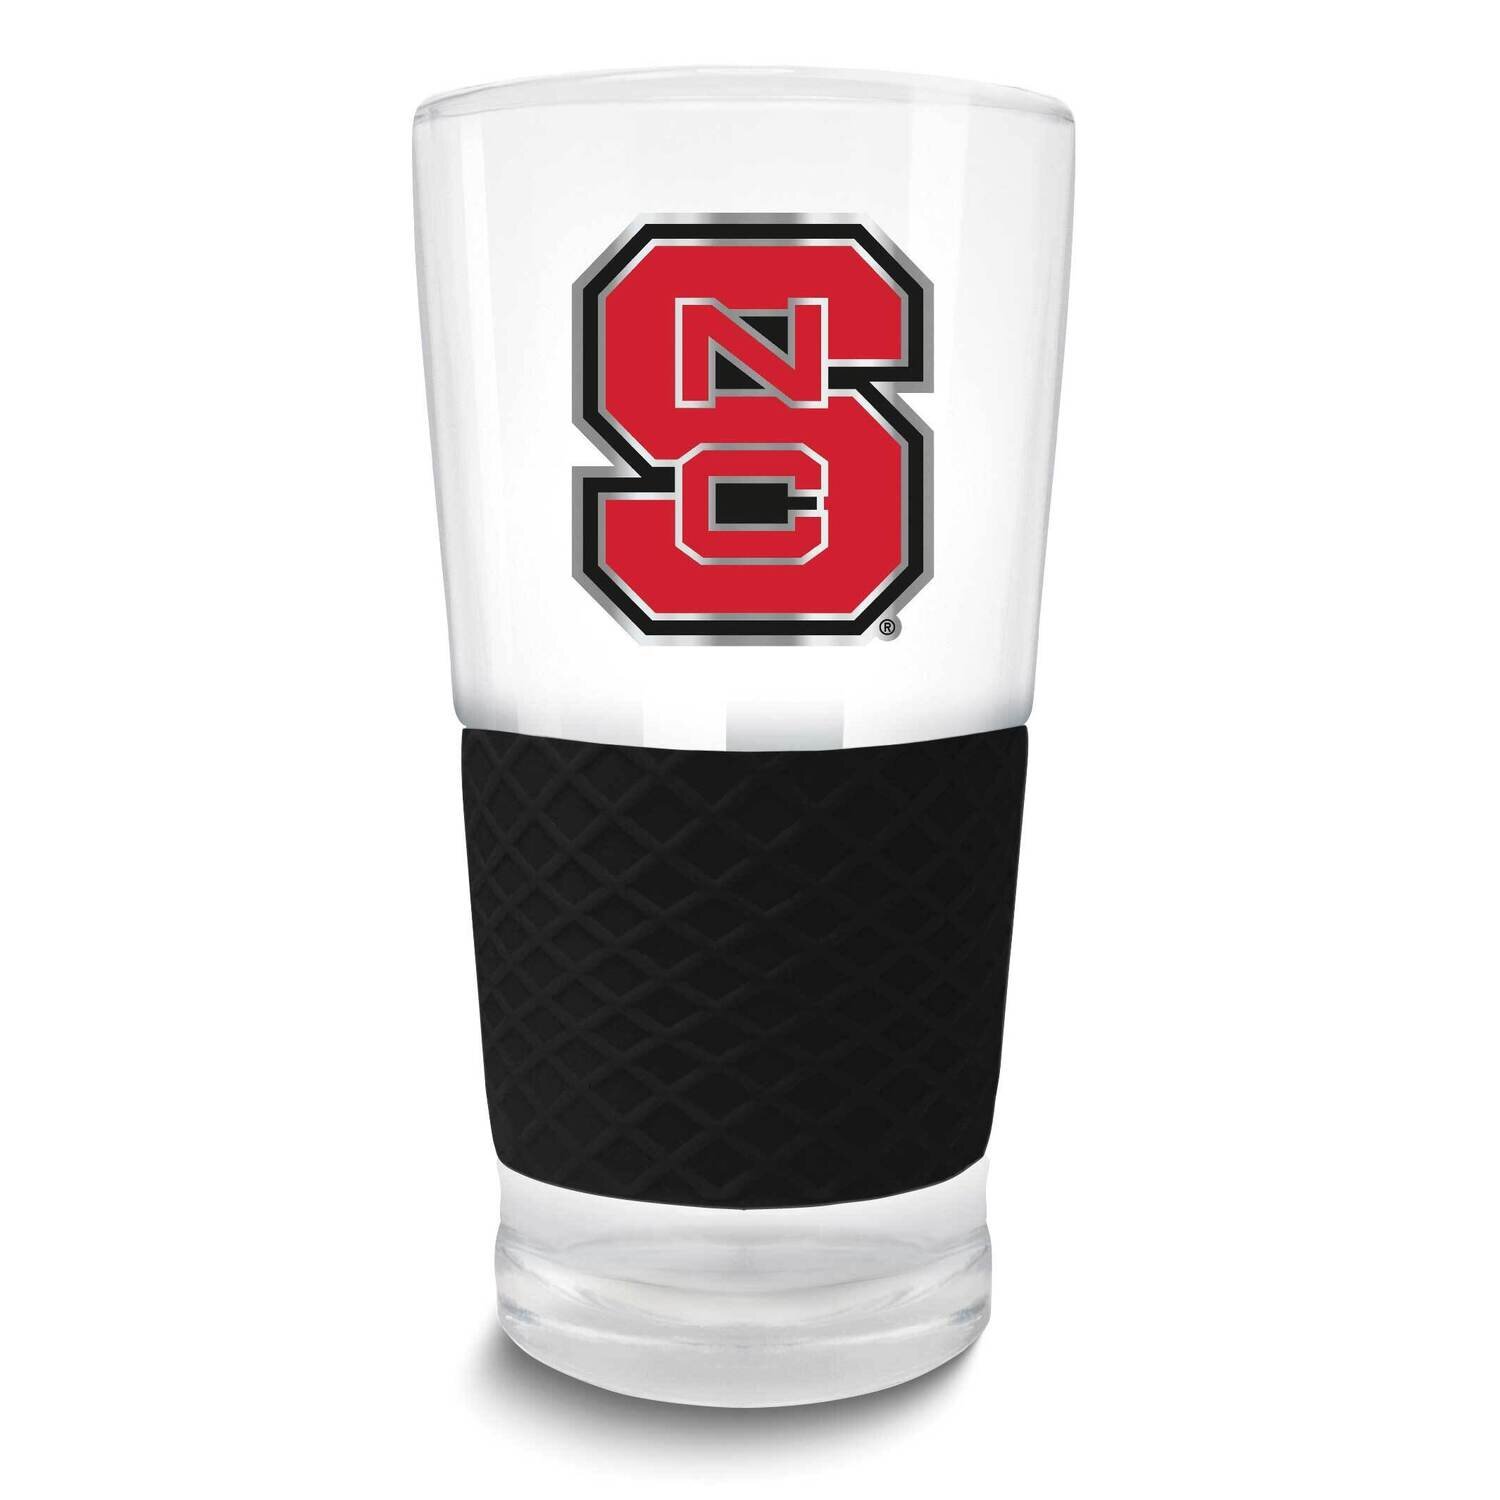 Collegiate North Carolina State University Score Pint Glass GM26126-NCS